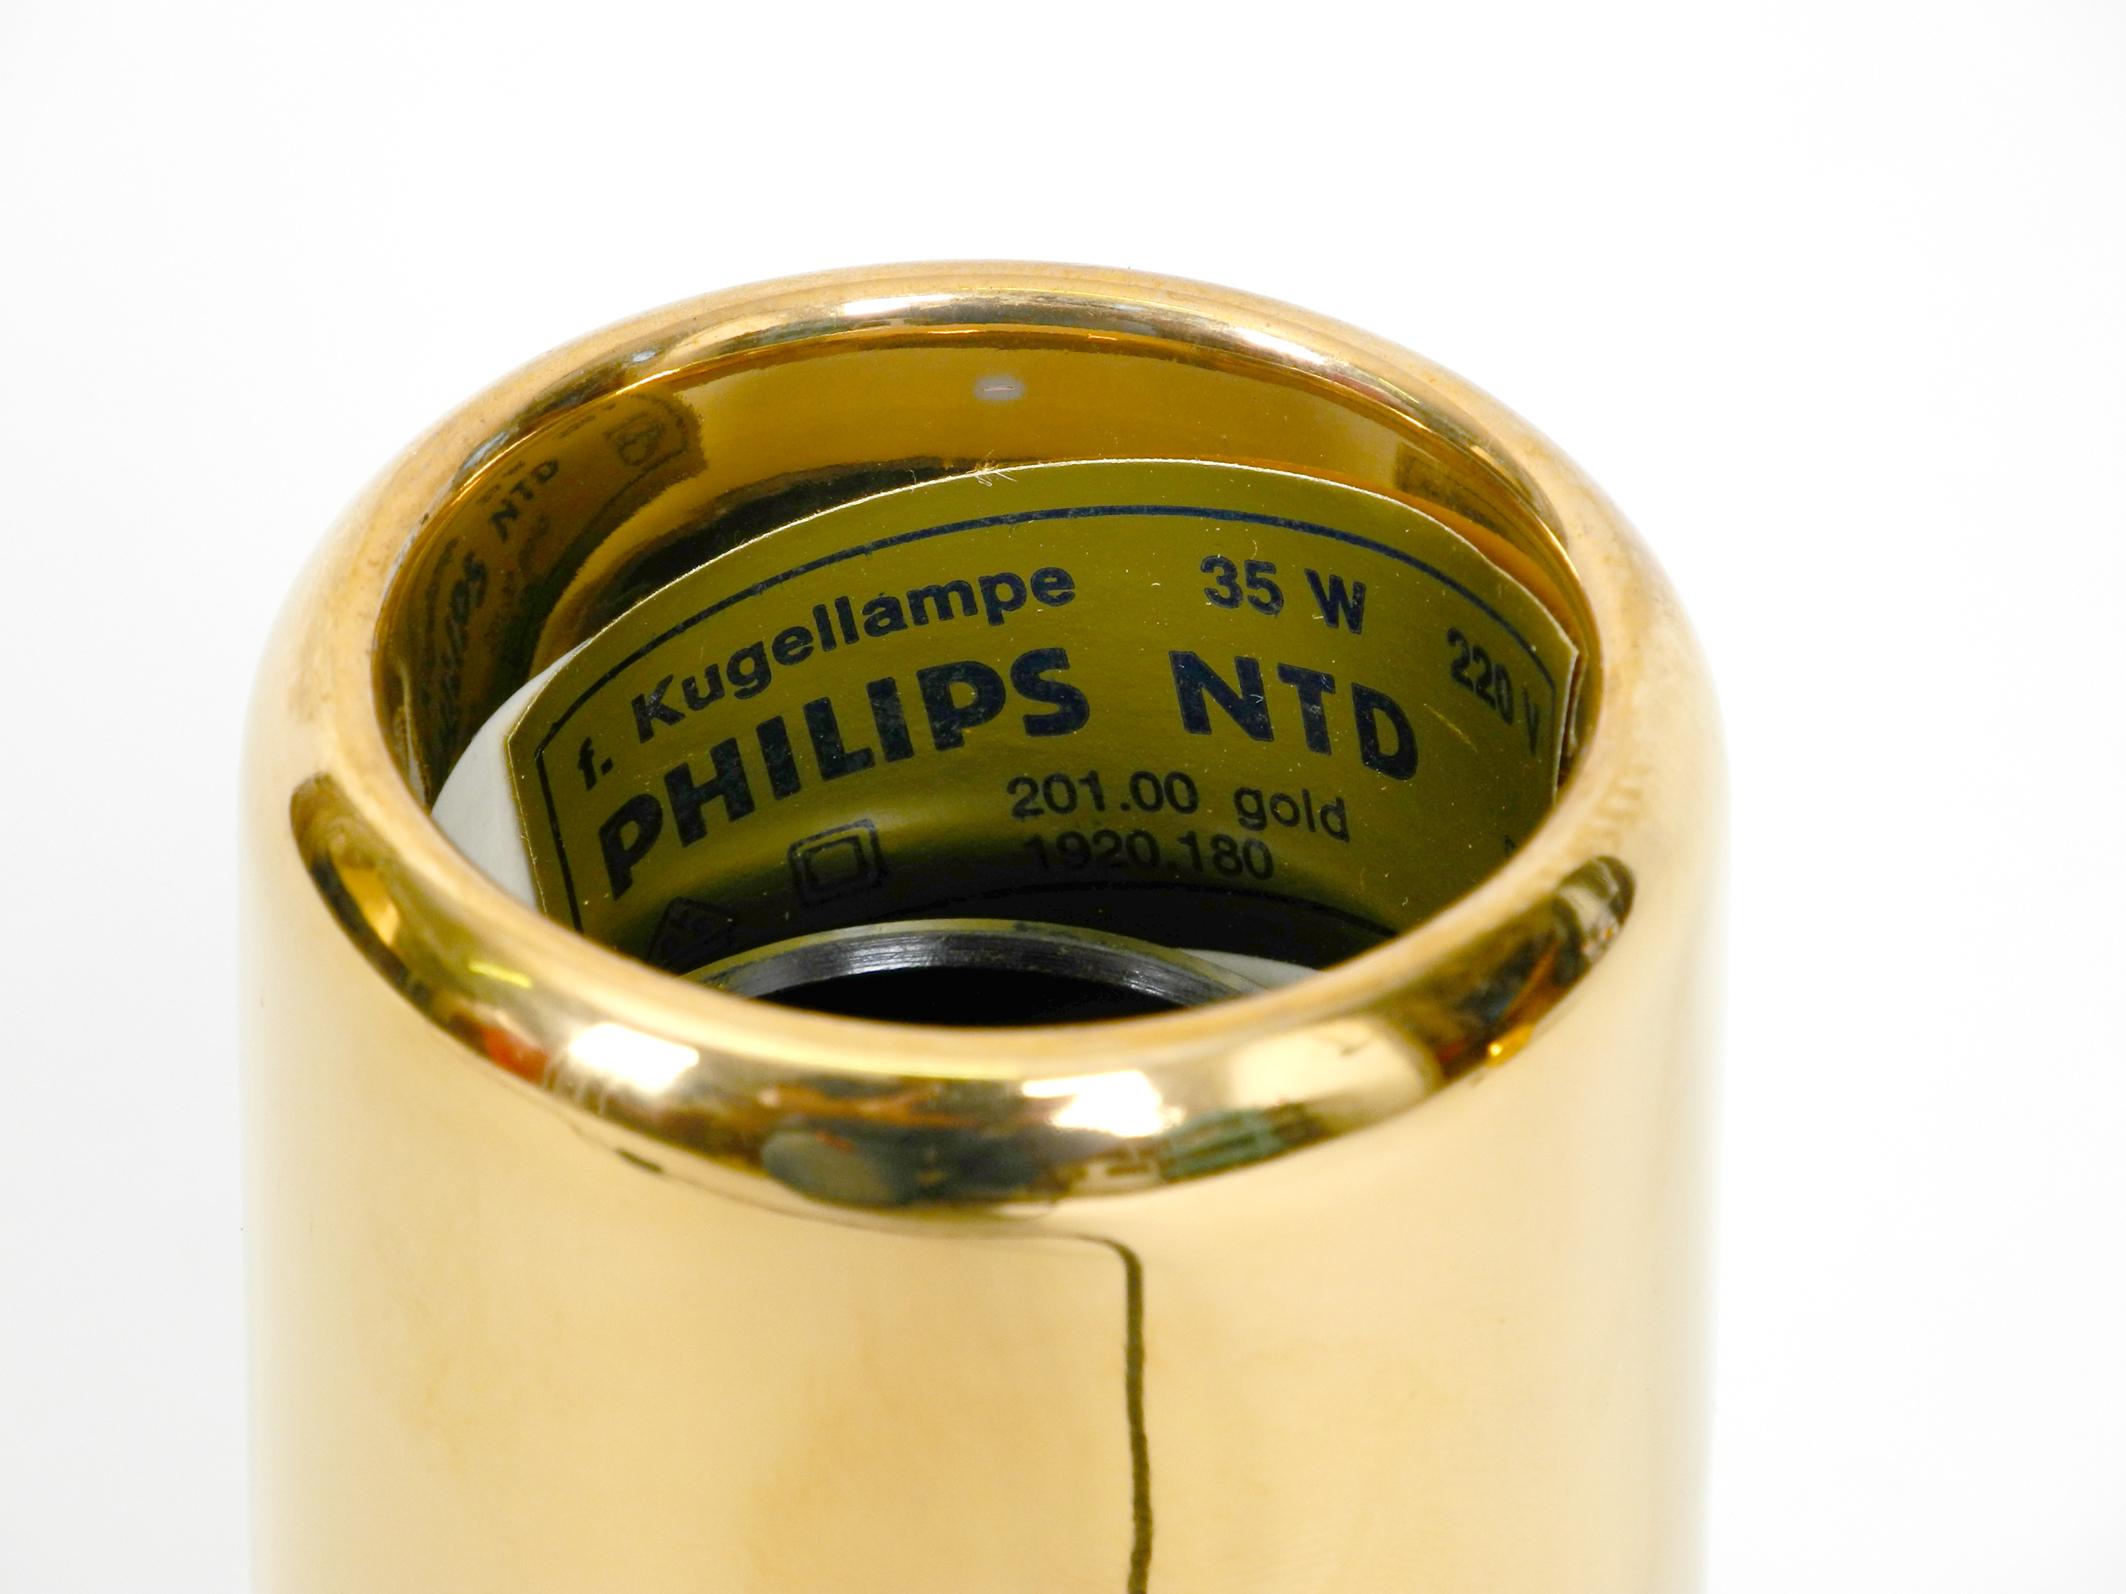 Very Rare Original 1970s Phillips NTD Ceramic Table Lamp in Gold Lacquer For Sale 2